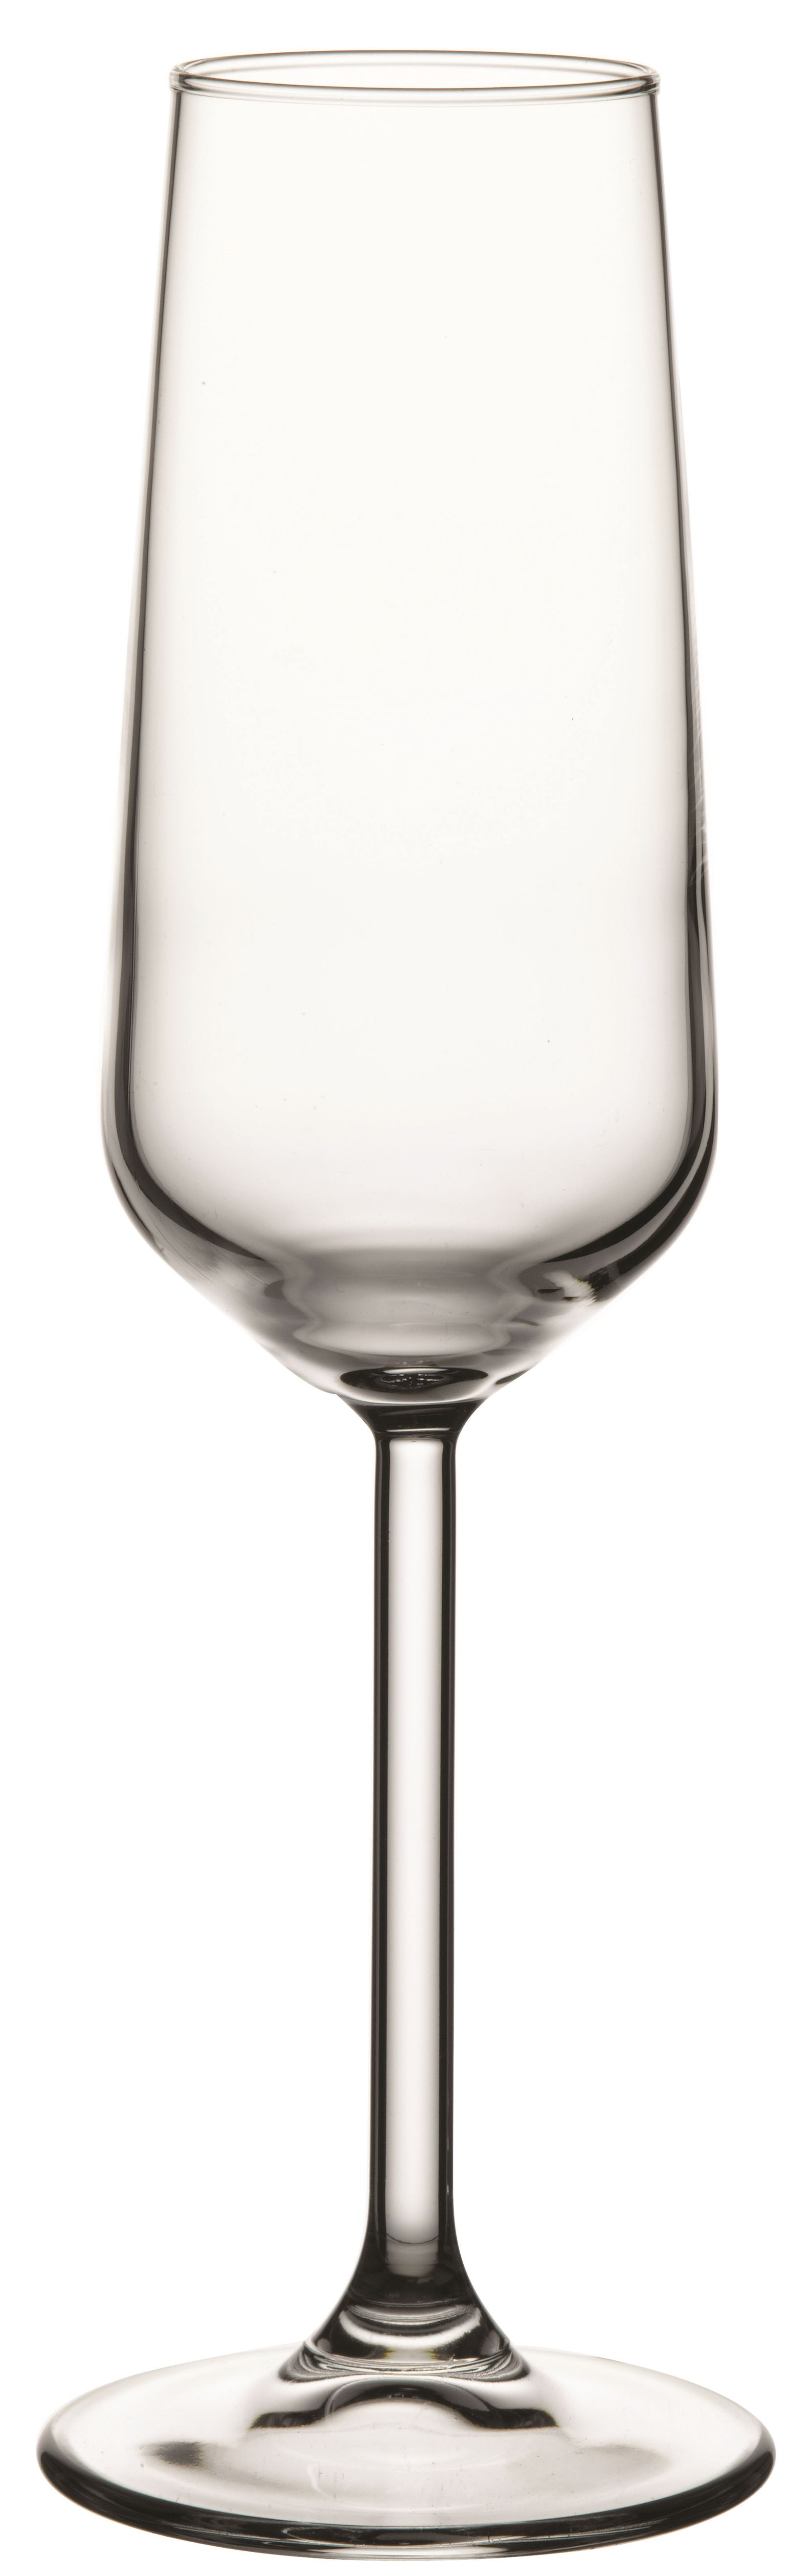 Champagnerkelch Allegra, 0,195 ltr., Glas